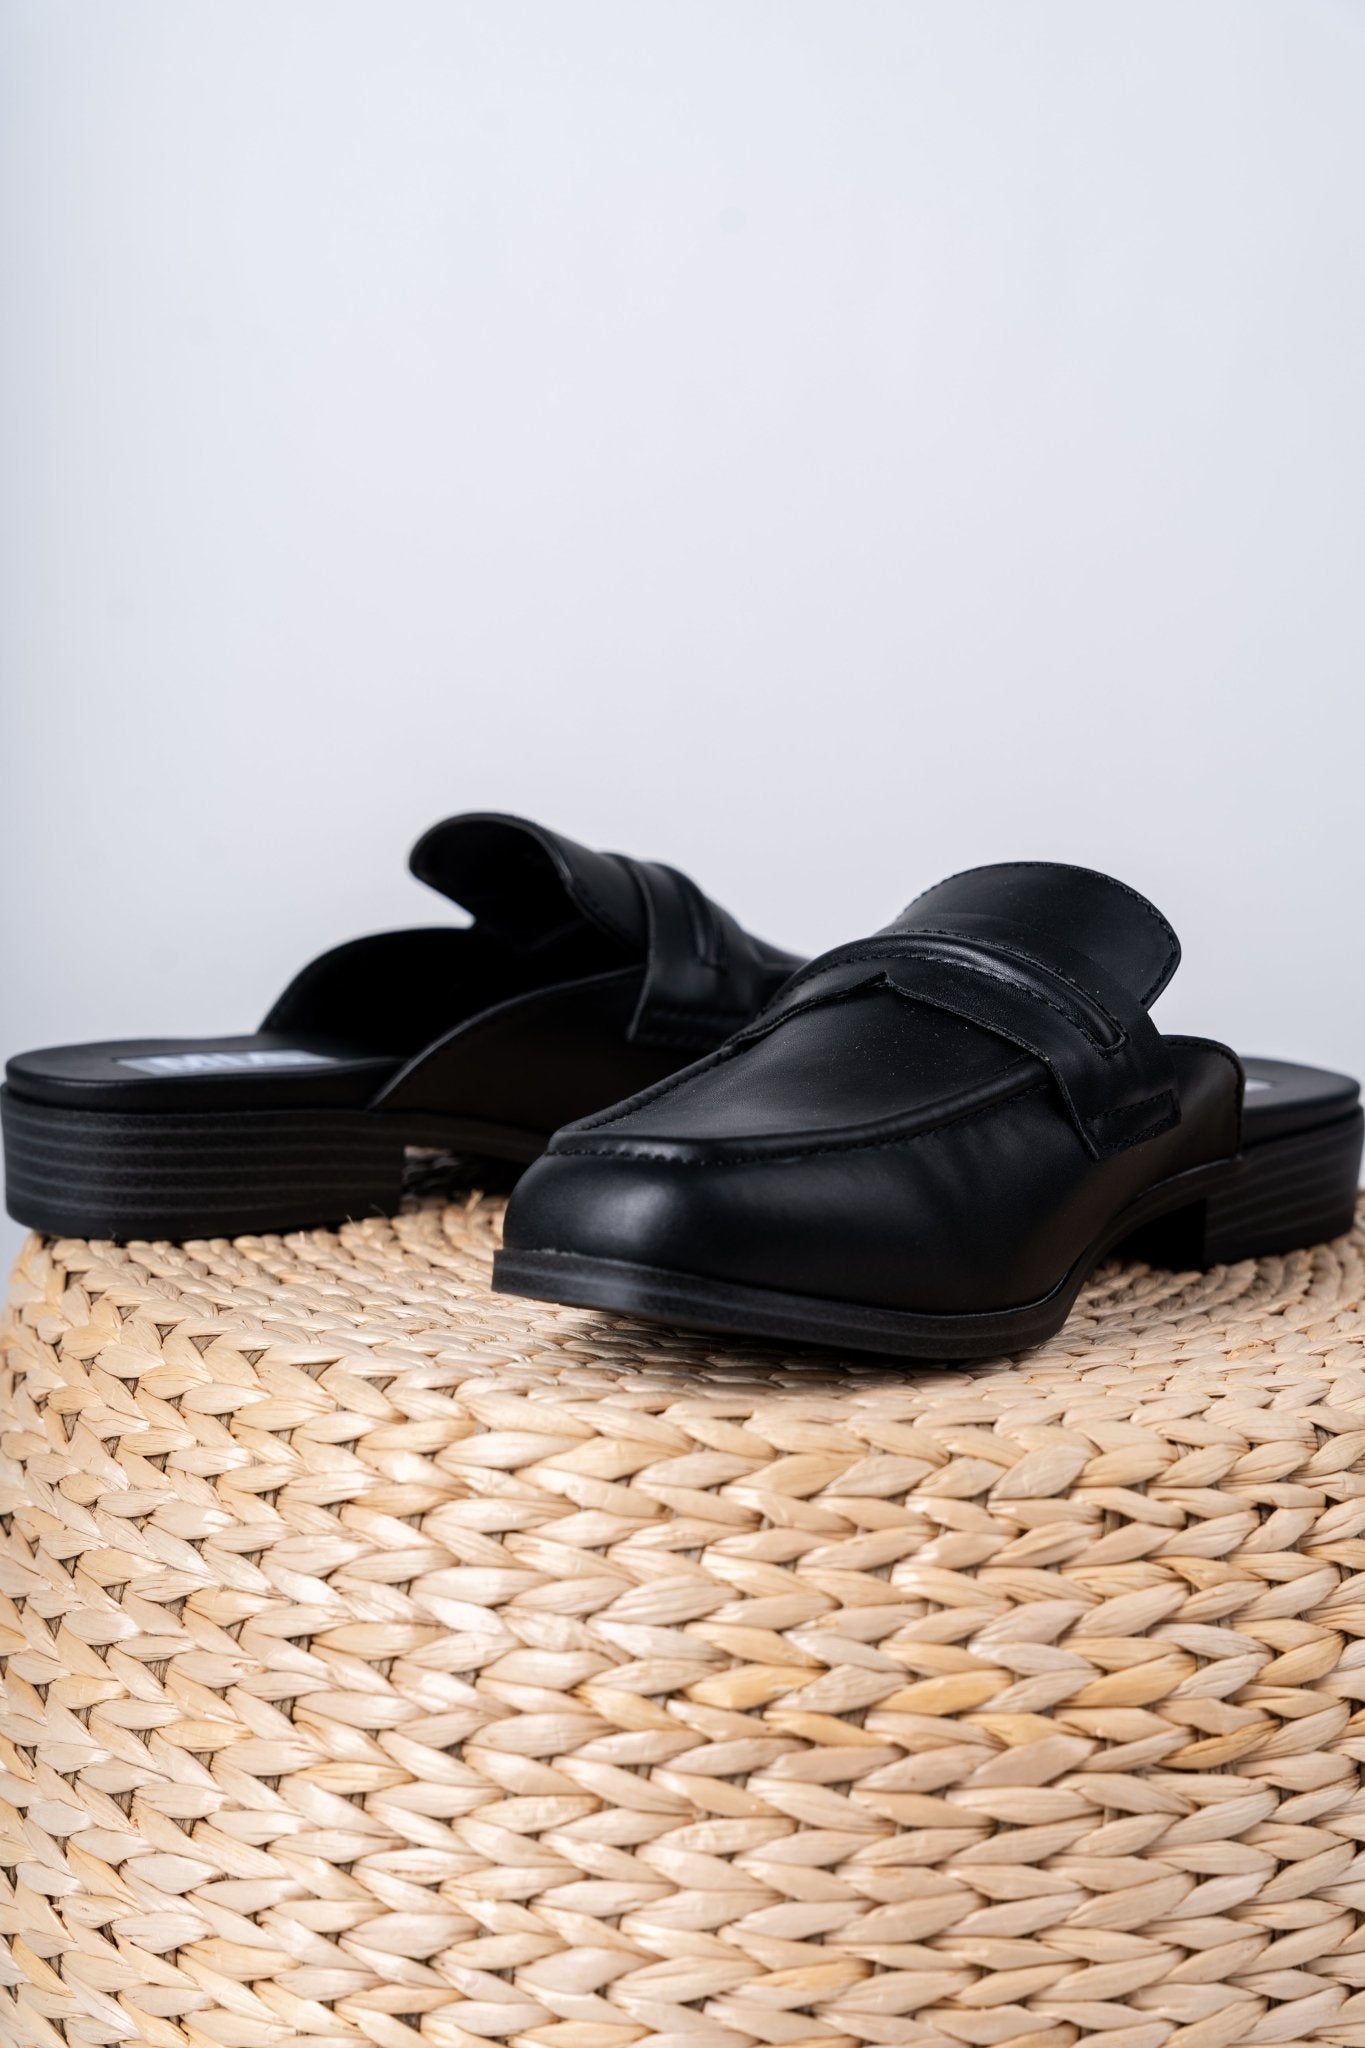 Milia mule loafer black Stylish Shoes - Womens Fashion Shoes at Lush Fashion Lounge Boutique in Oklahoma City